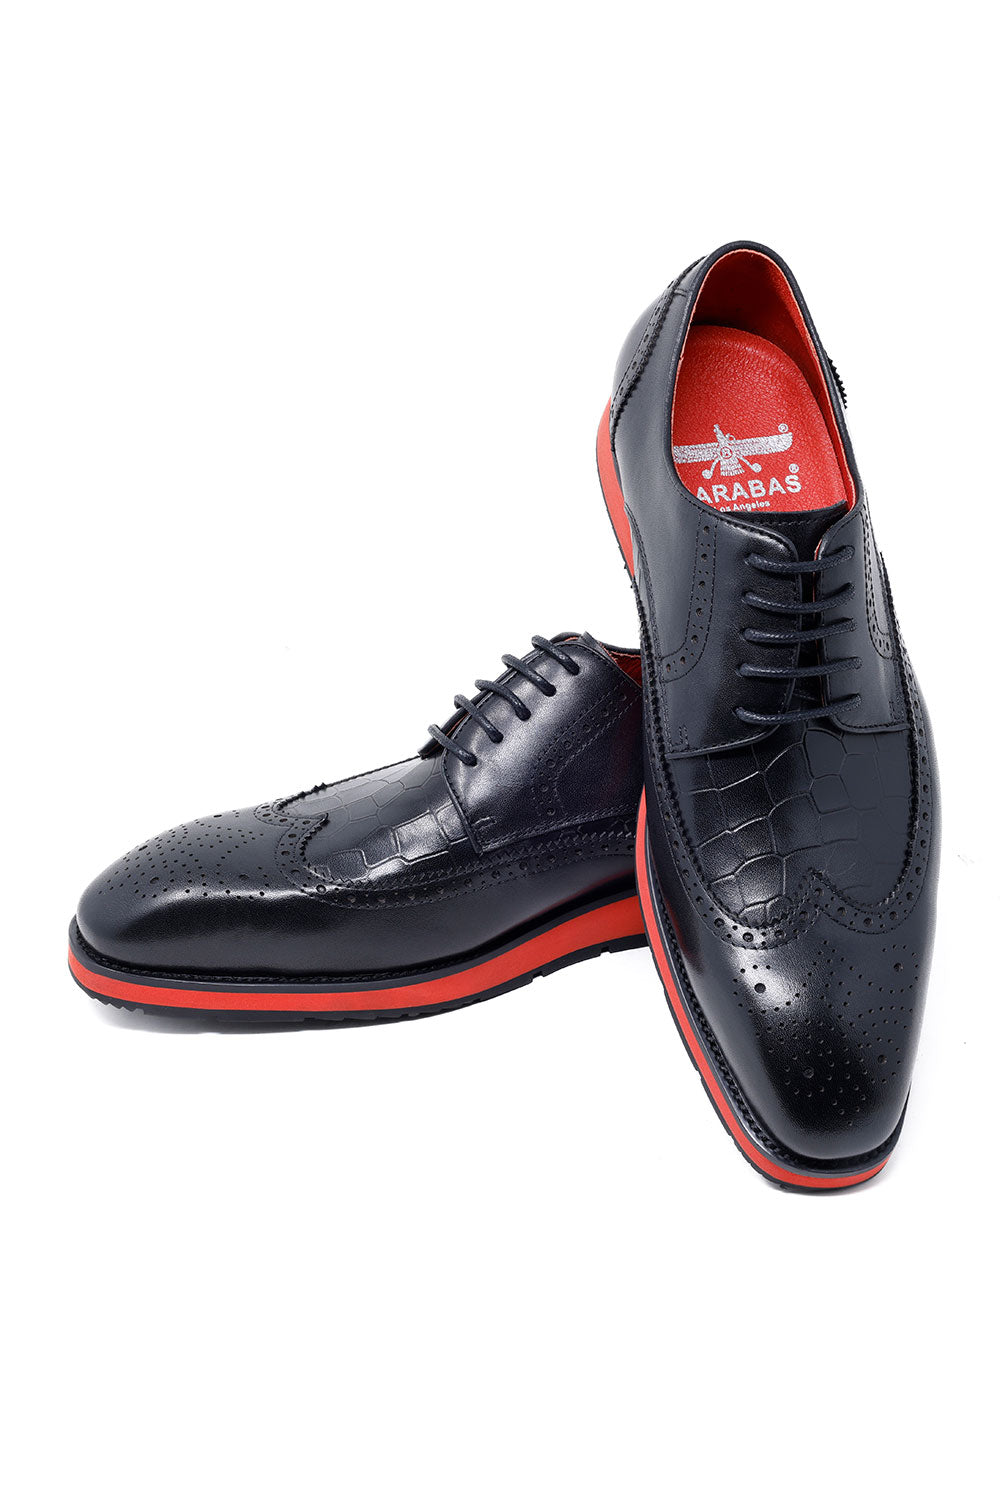 Barabas Men's Classic Wingtip Oxford Leather Loafer Shores 3SH35 Black